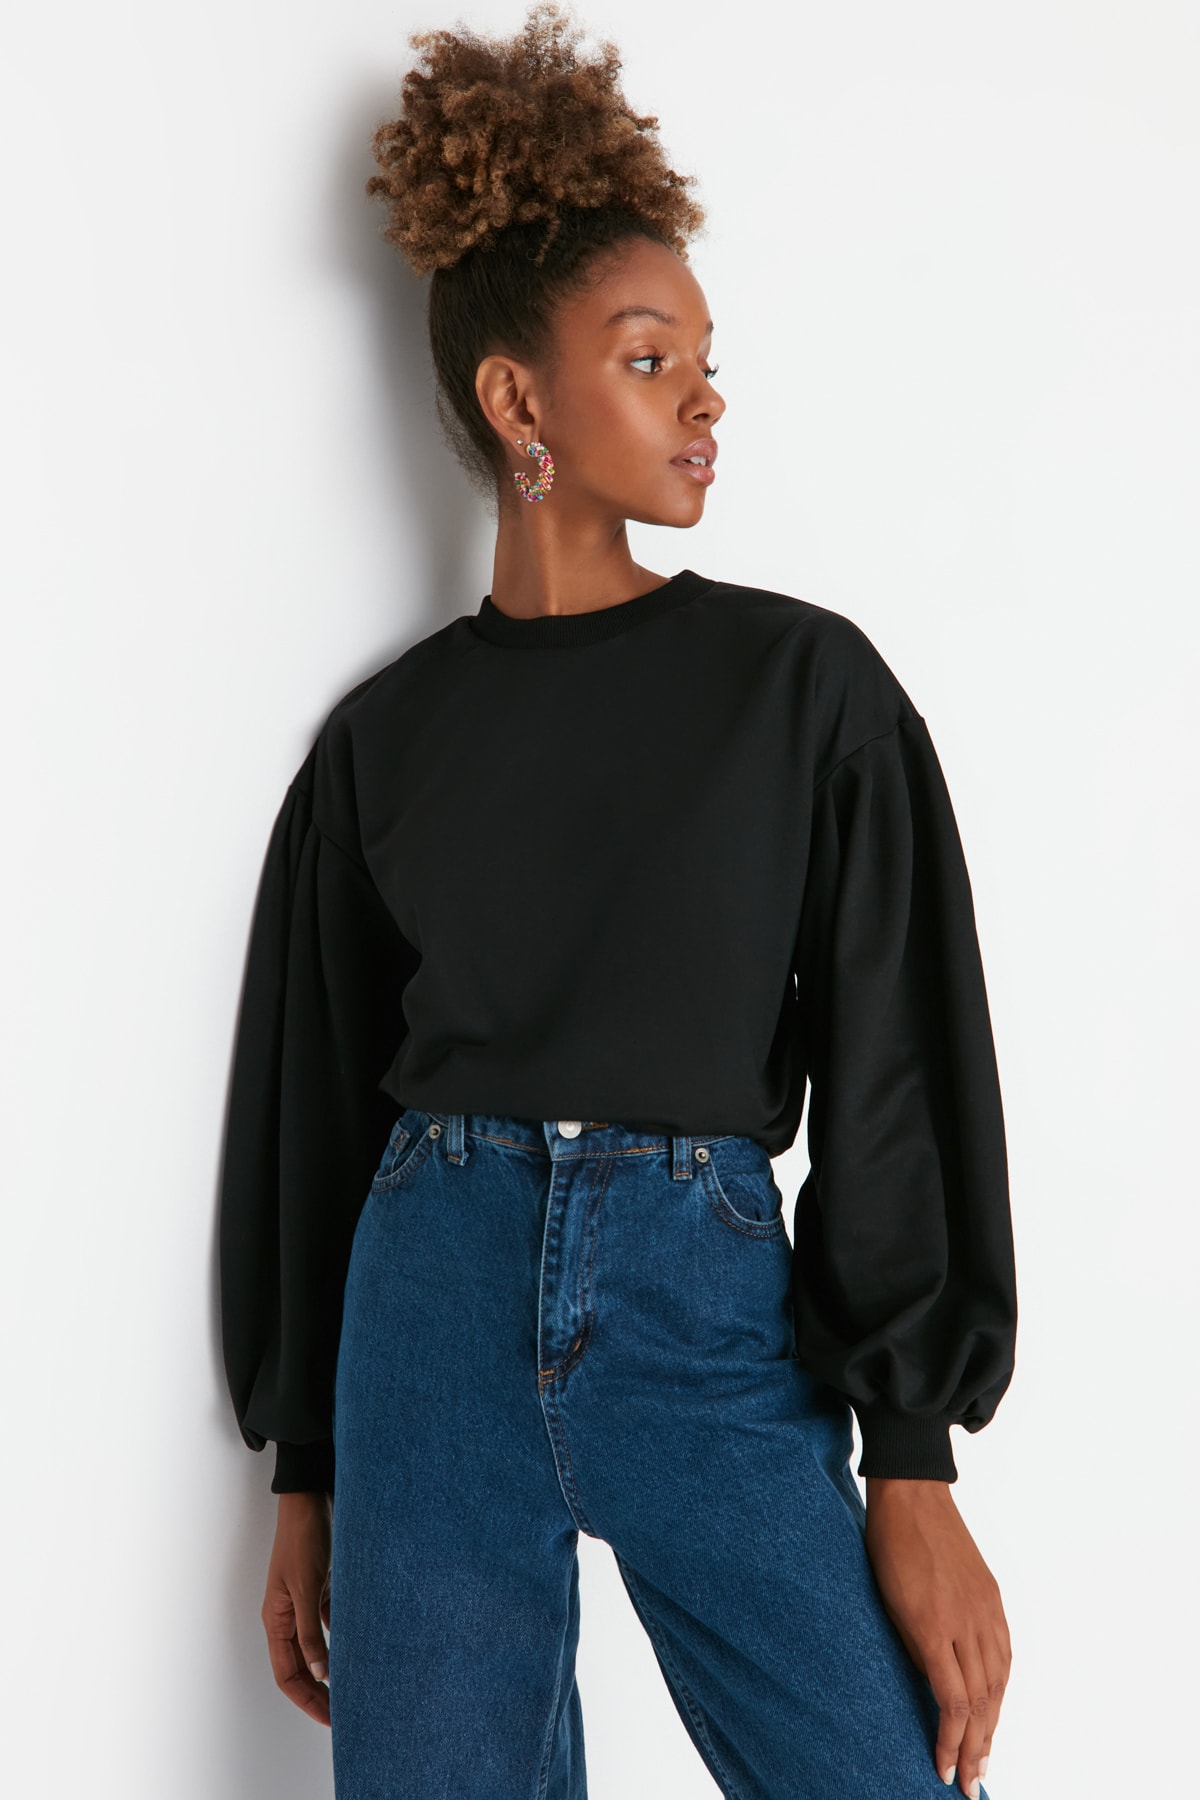 Trendyol Black Balloon Sleeve Thin, Basic Knitted Sweatshirt